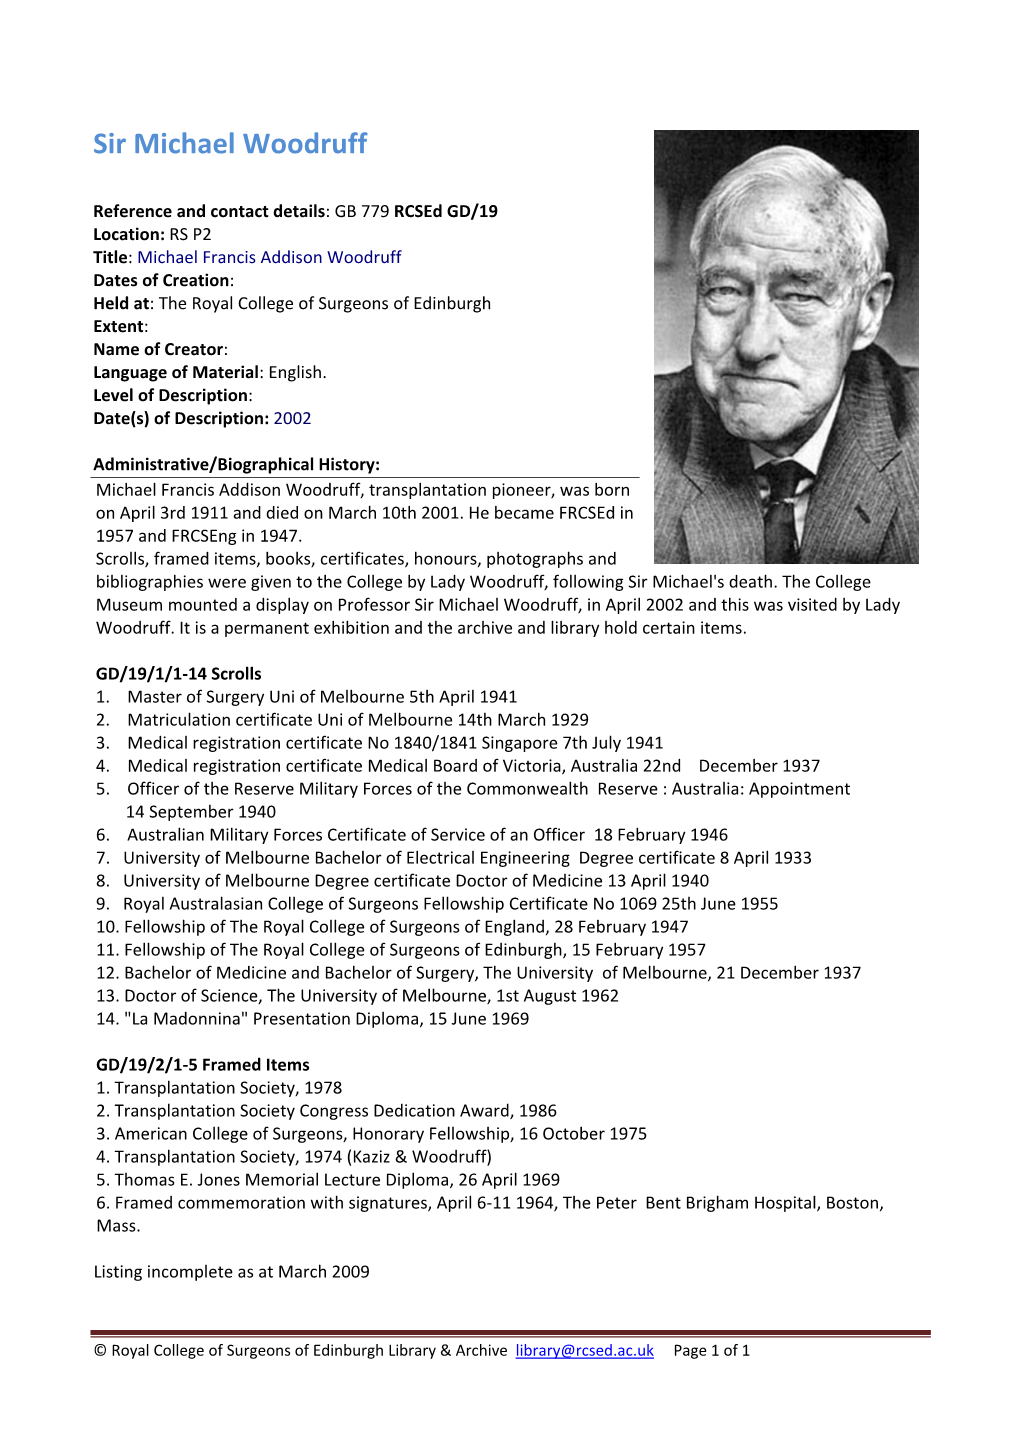 Professor Sir Michael Woodruff, 1911-2001